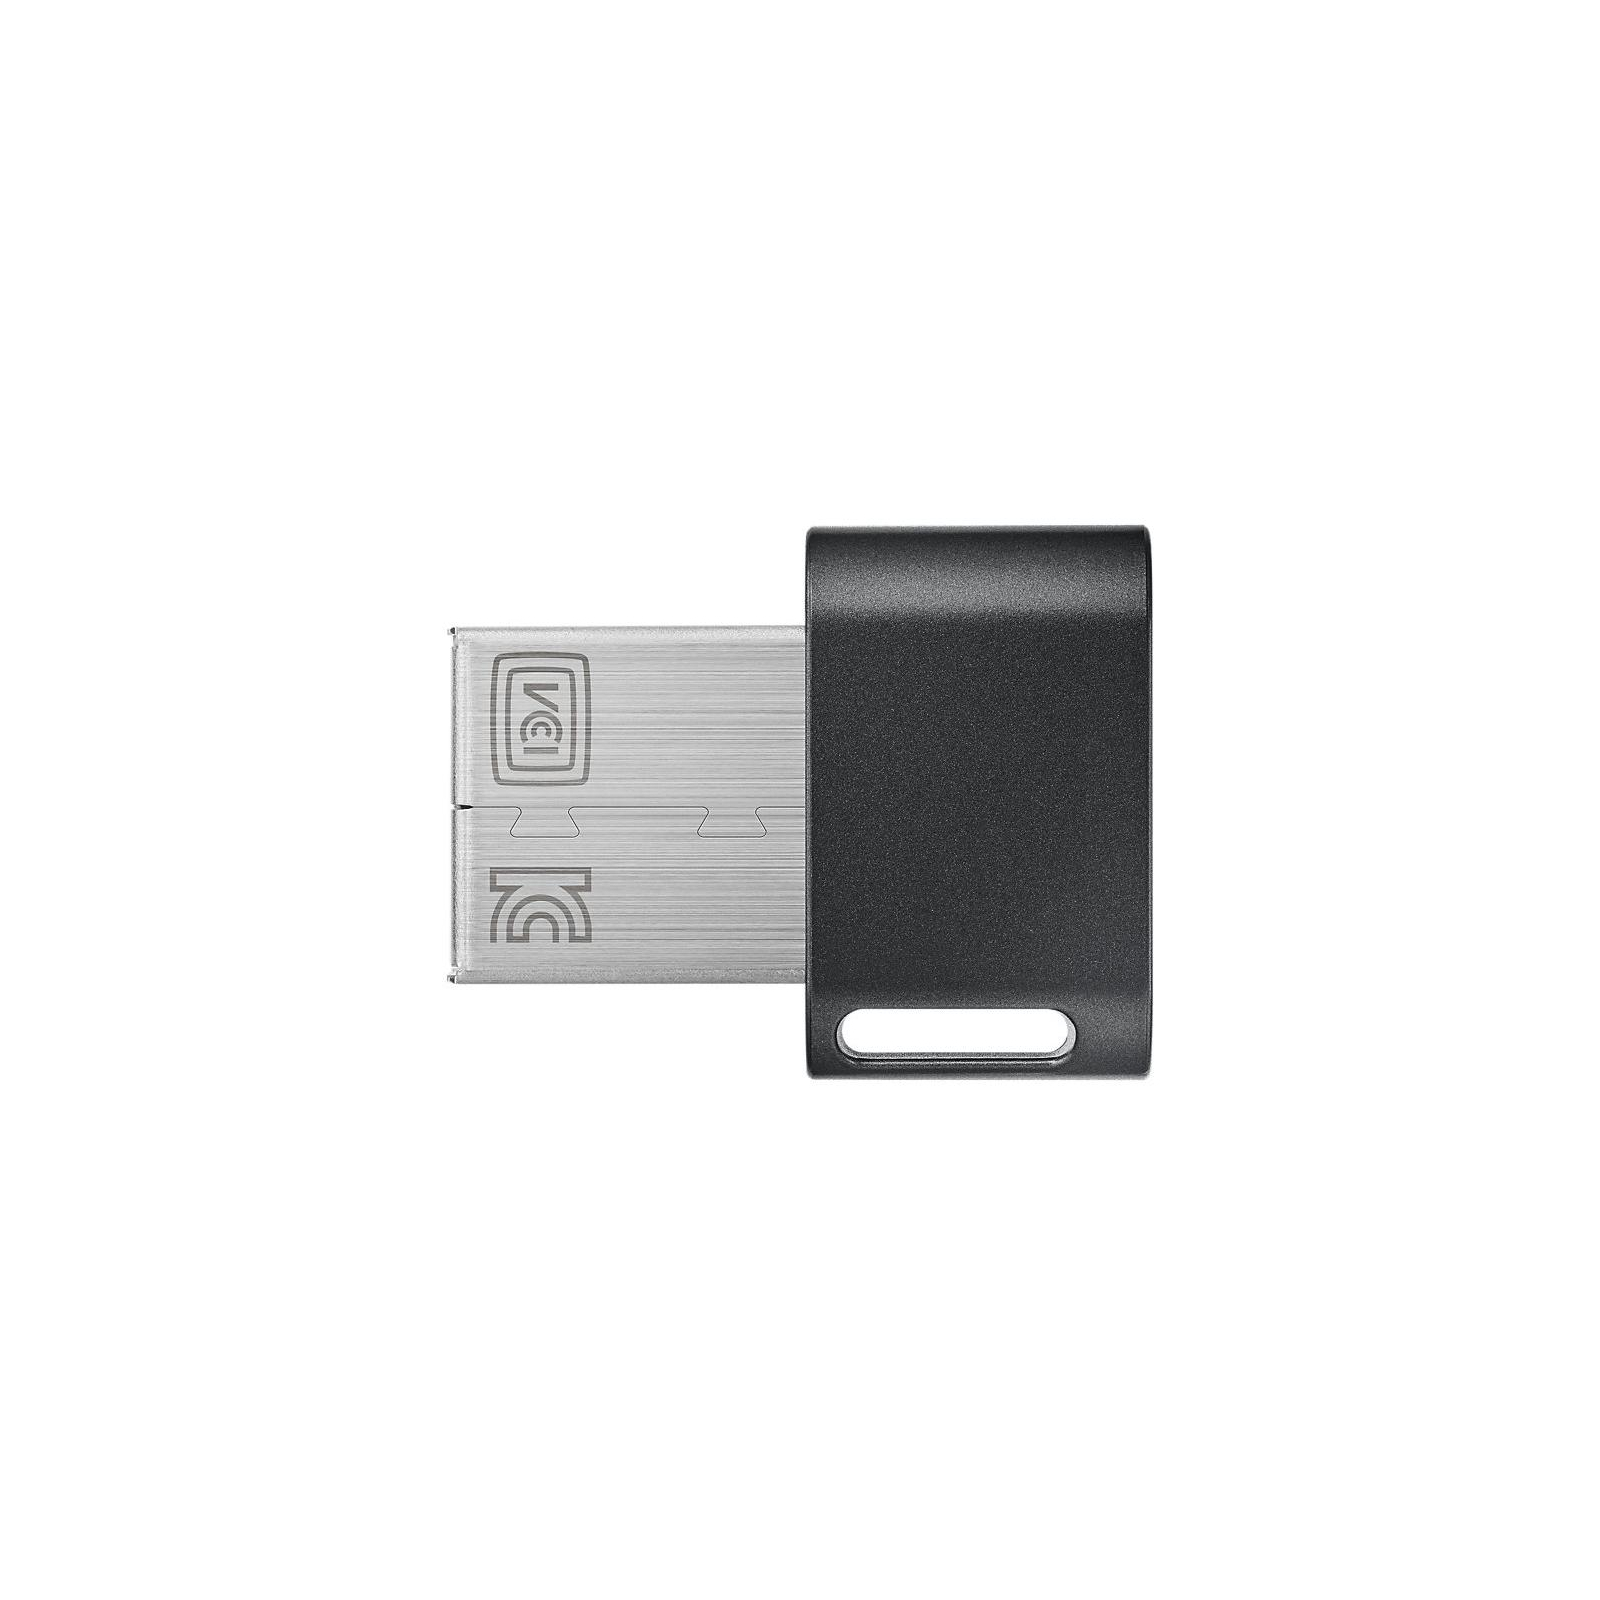 USB флеш накопитель Samsung 32GB Fit Plus USB 3.0 (MUF-32AB/APC) изображение 3